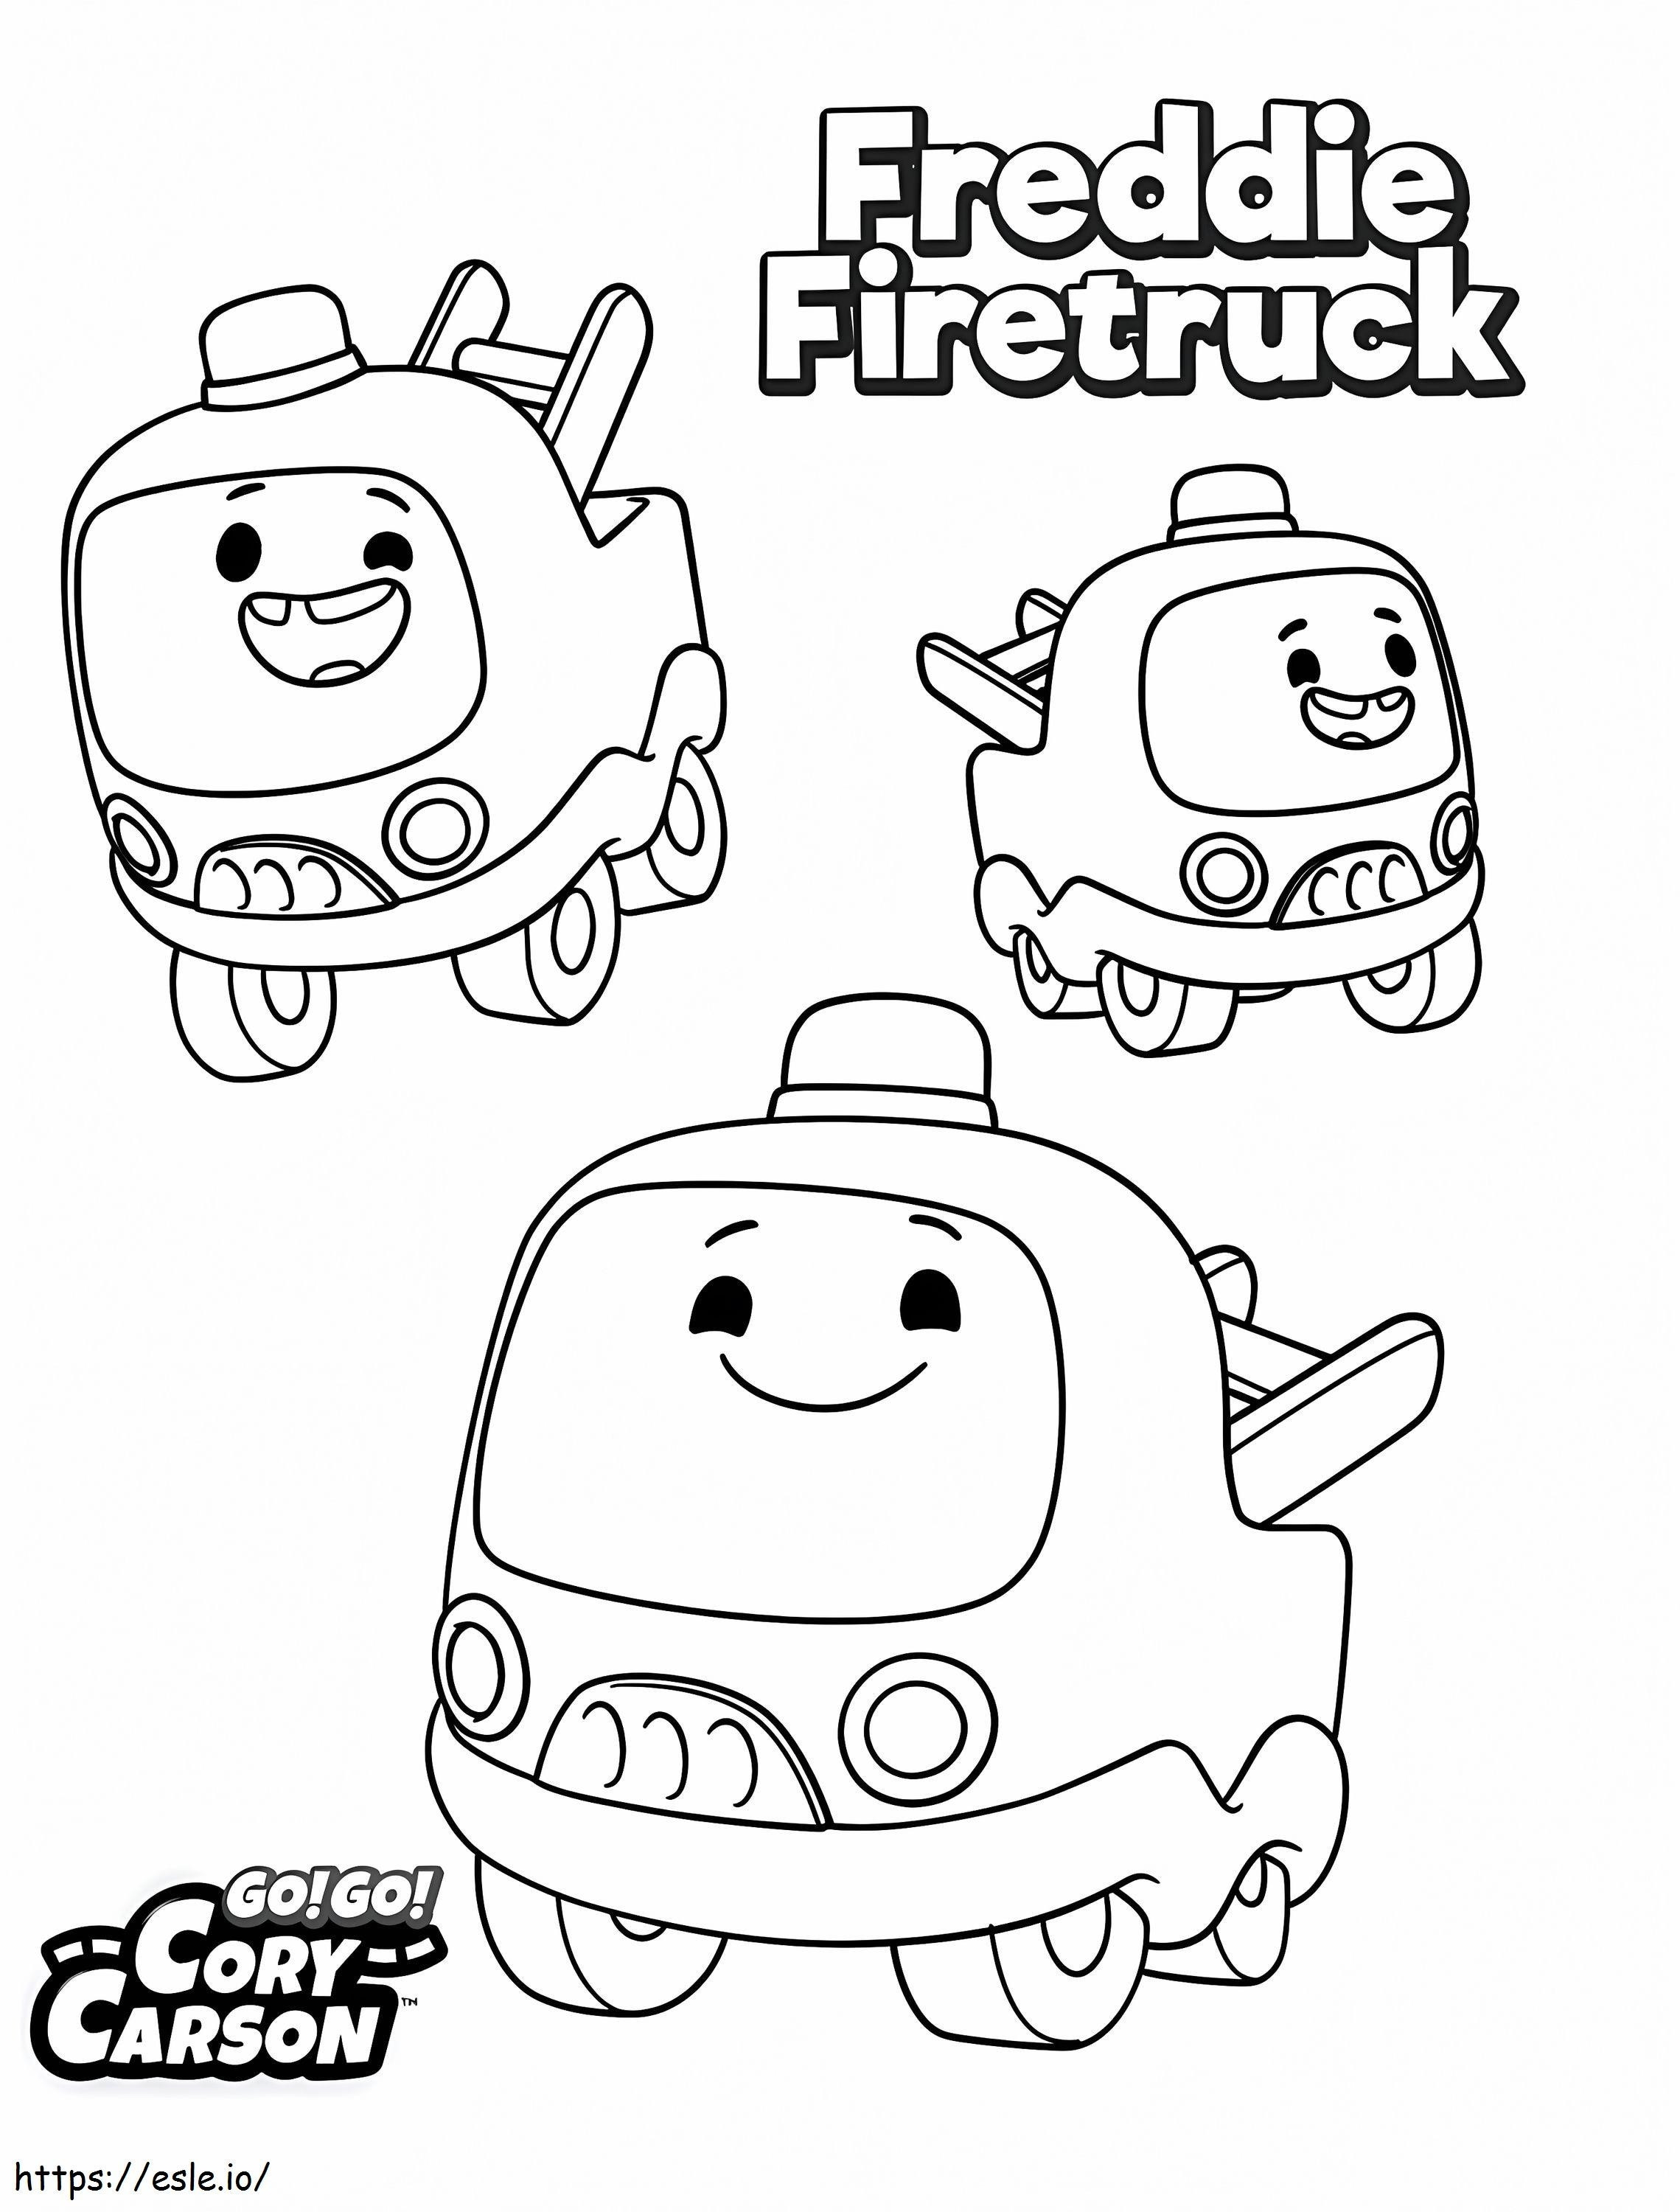 Freddie Firetruck de Go Go Cory Carson para colorir